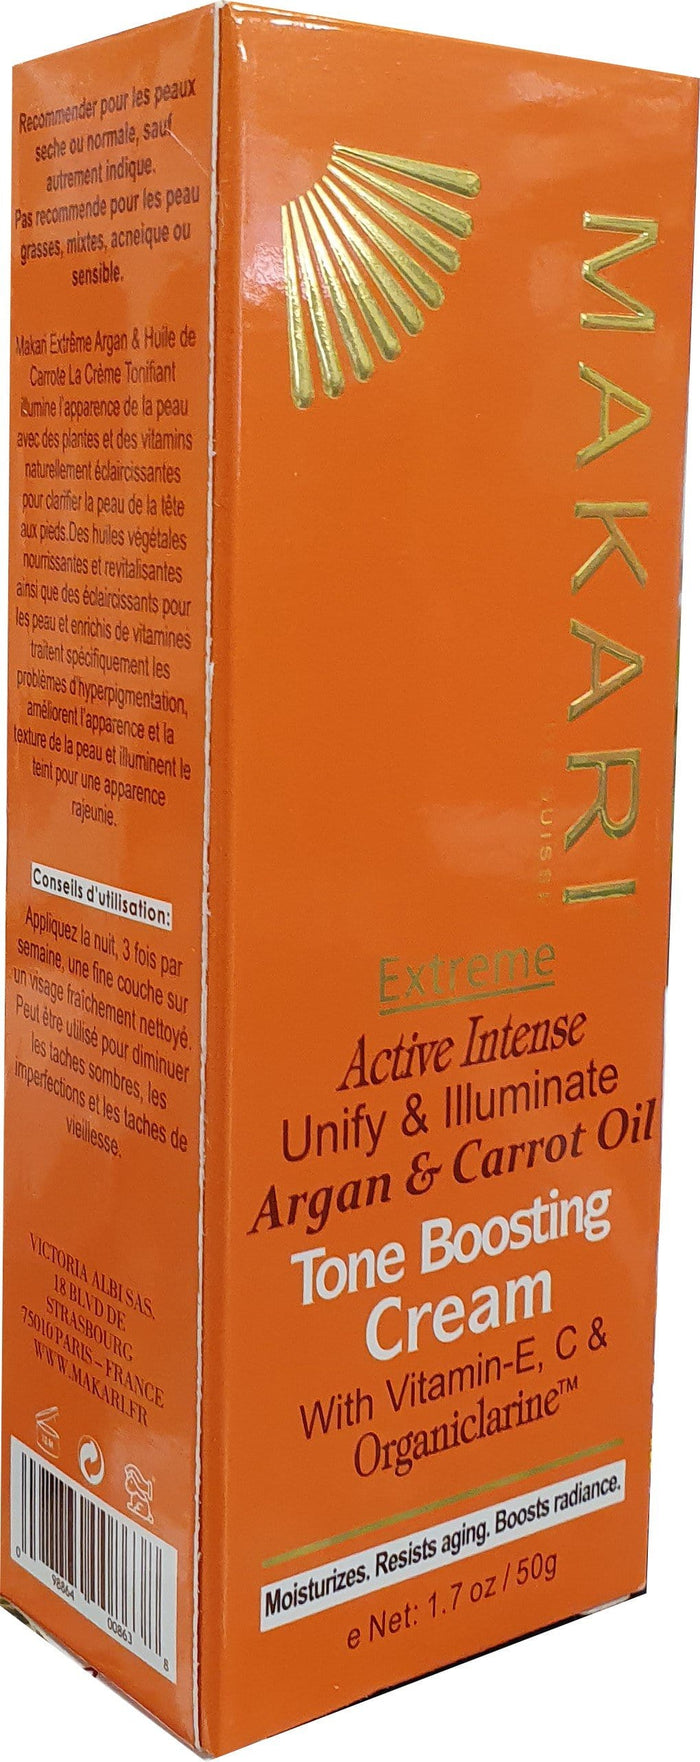 Makari Extreme Active Intense Argan and Carrot Oil  Toning Cream 50 g